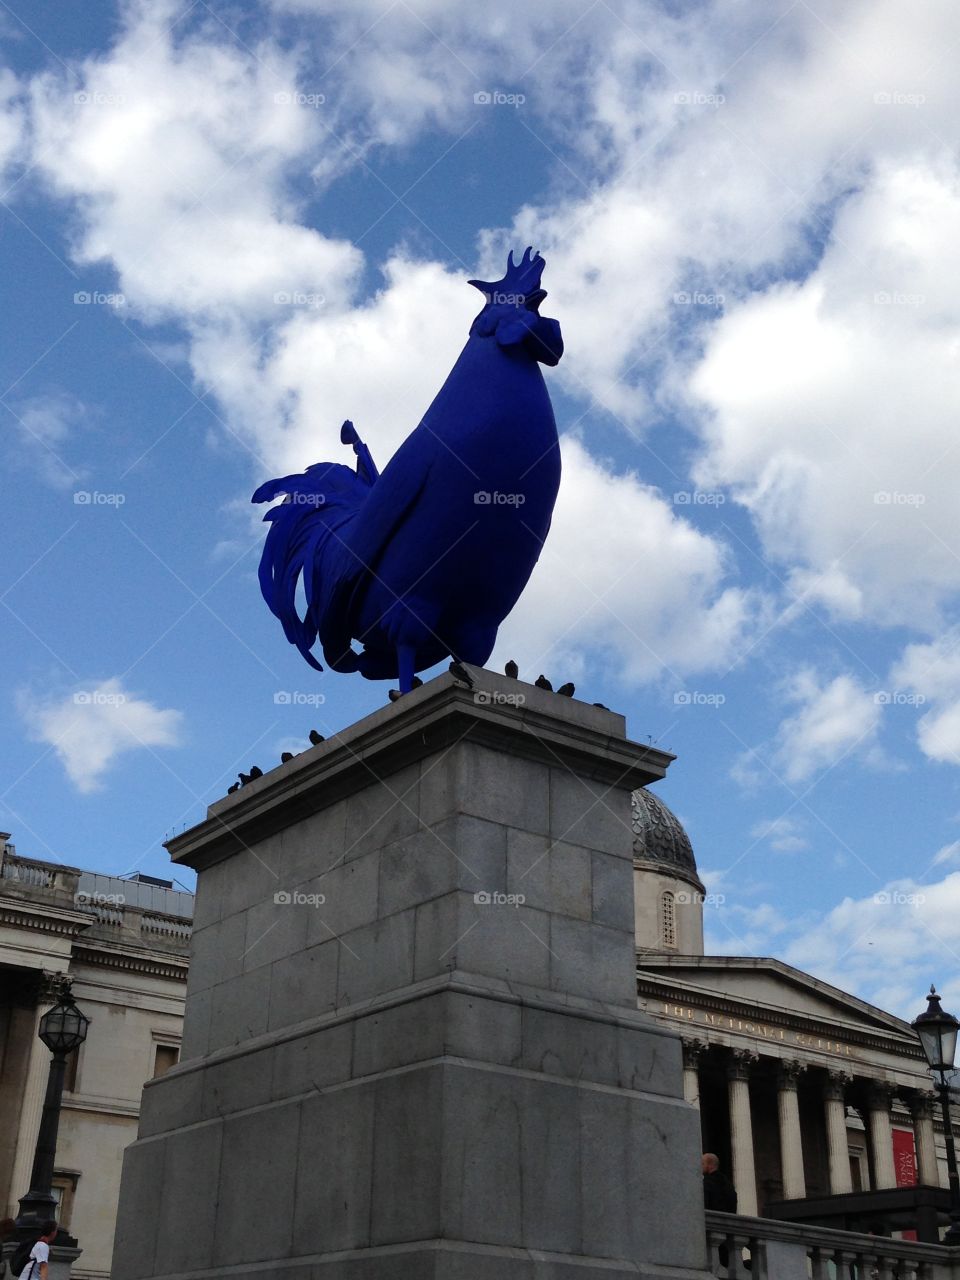 Blue roaster. Blue roaster in Trafalgar Square, London